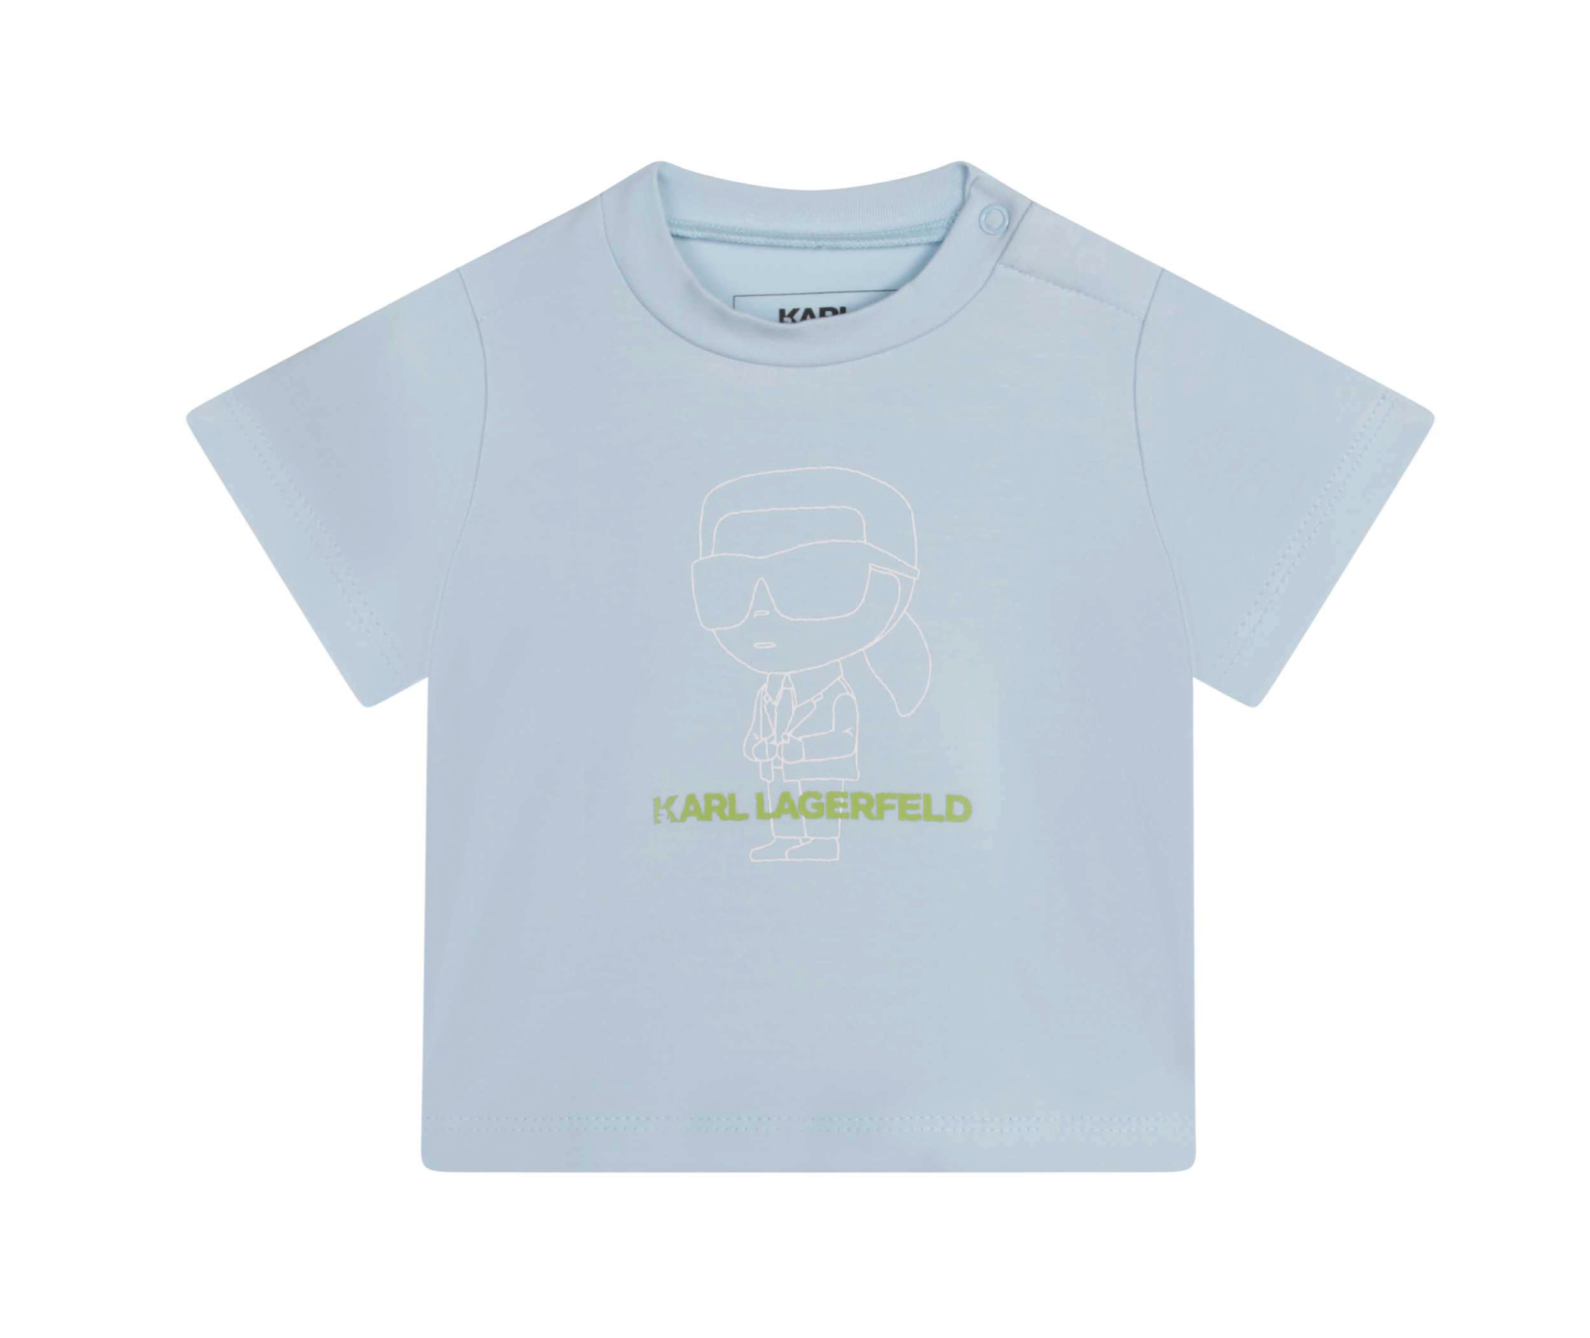 KARL LAGERFELD - T-shirt bleu - 18 mois